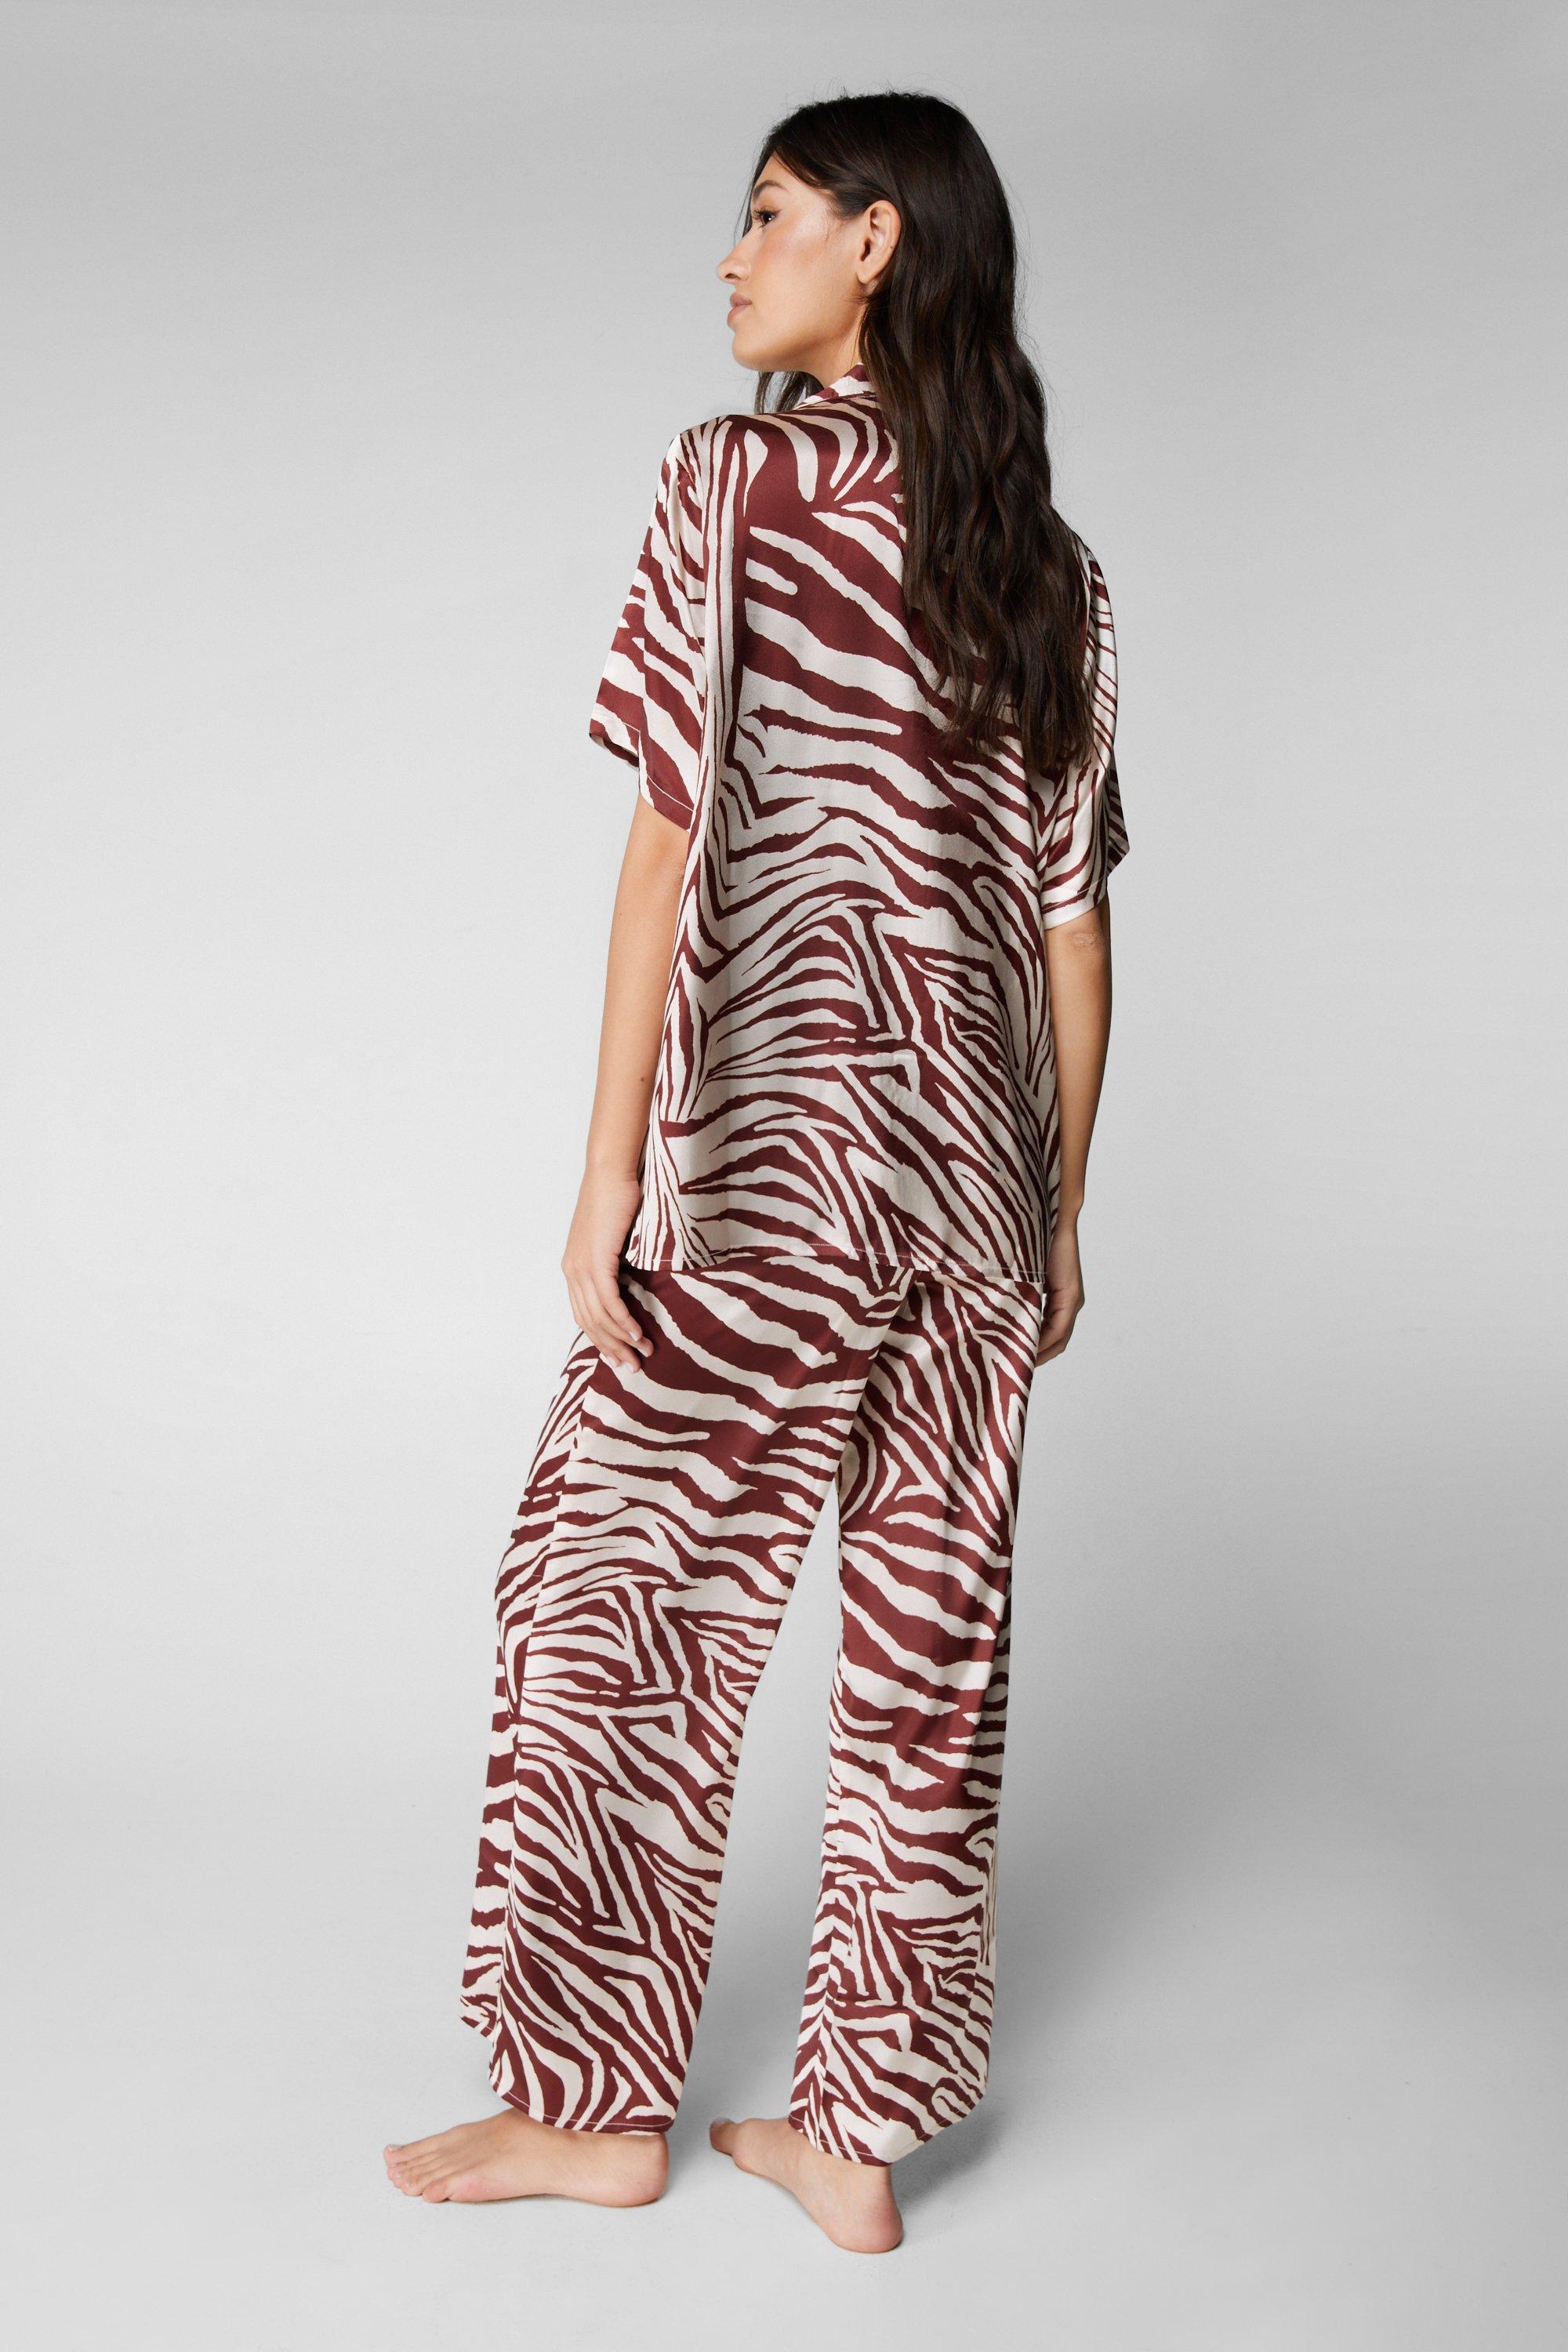 Satin Zebra Oversized Pajama Pants Set